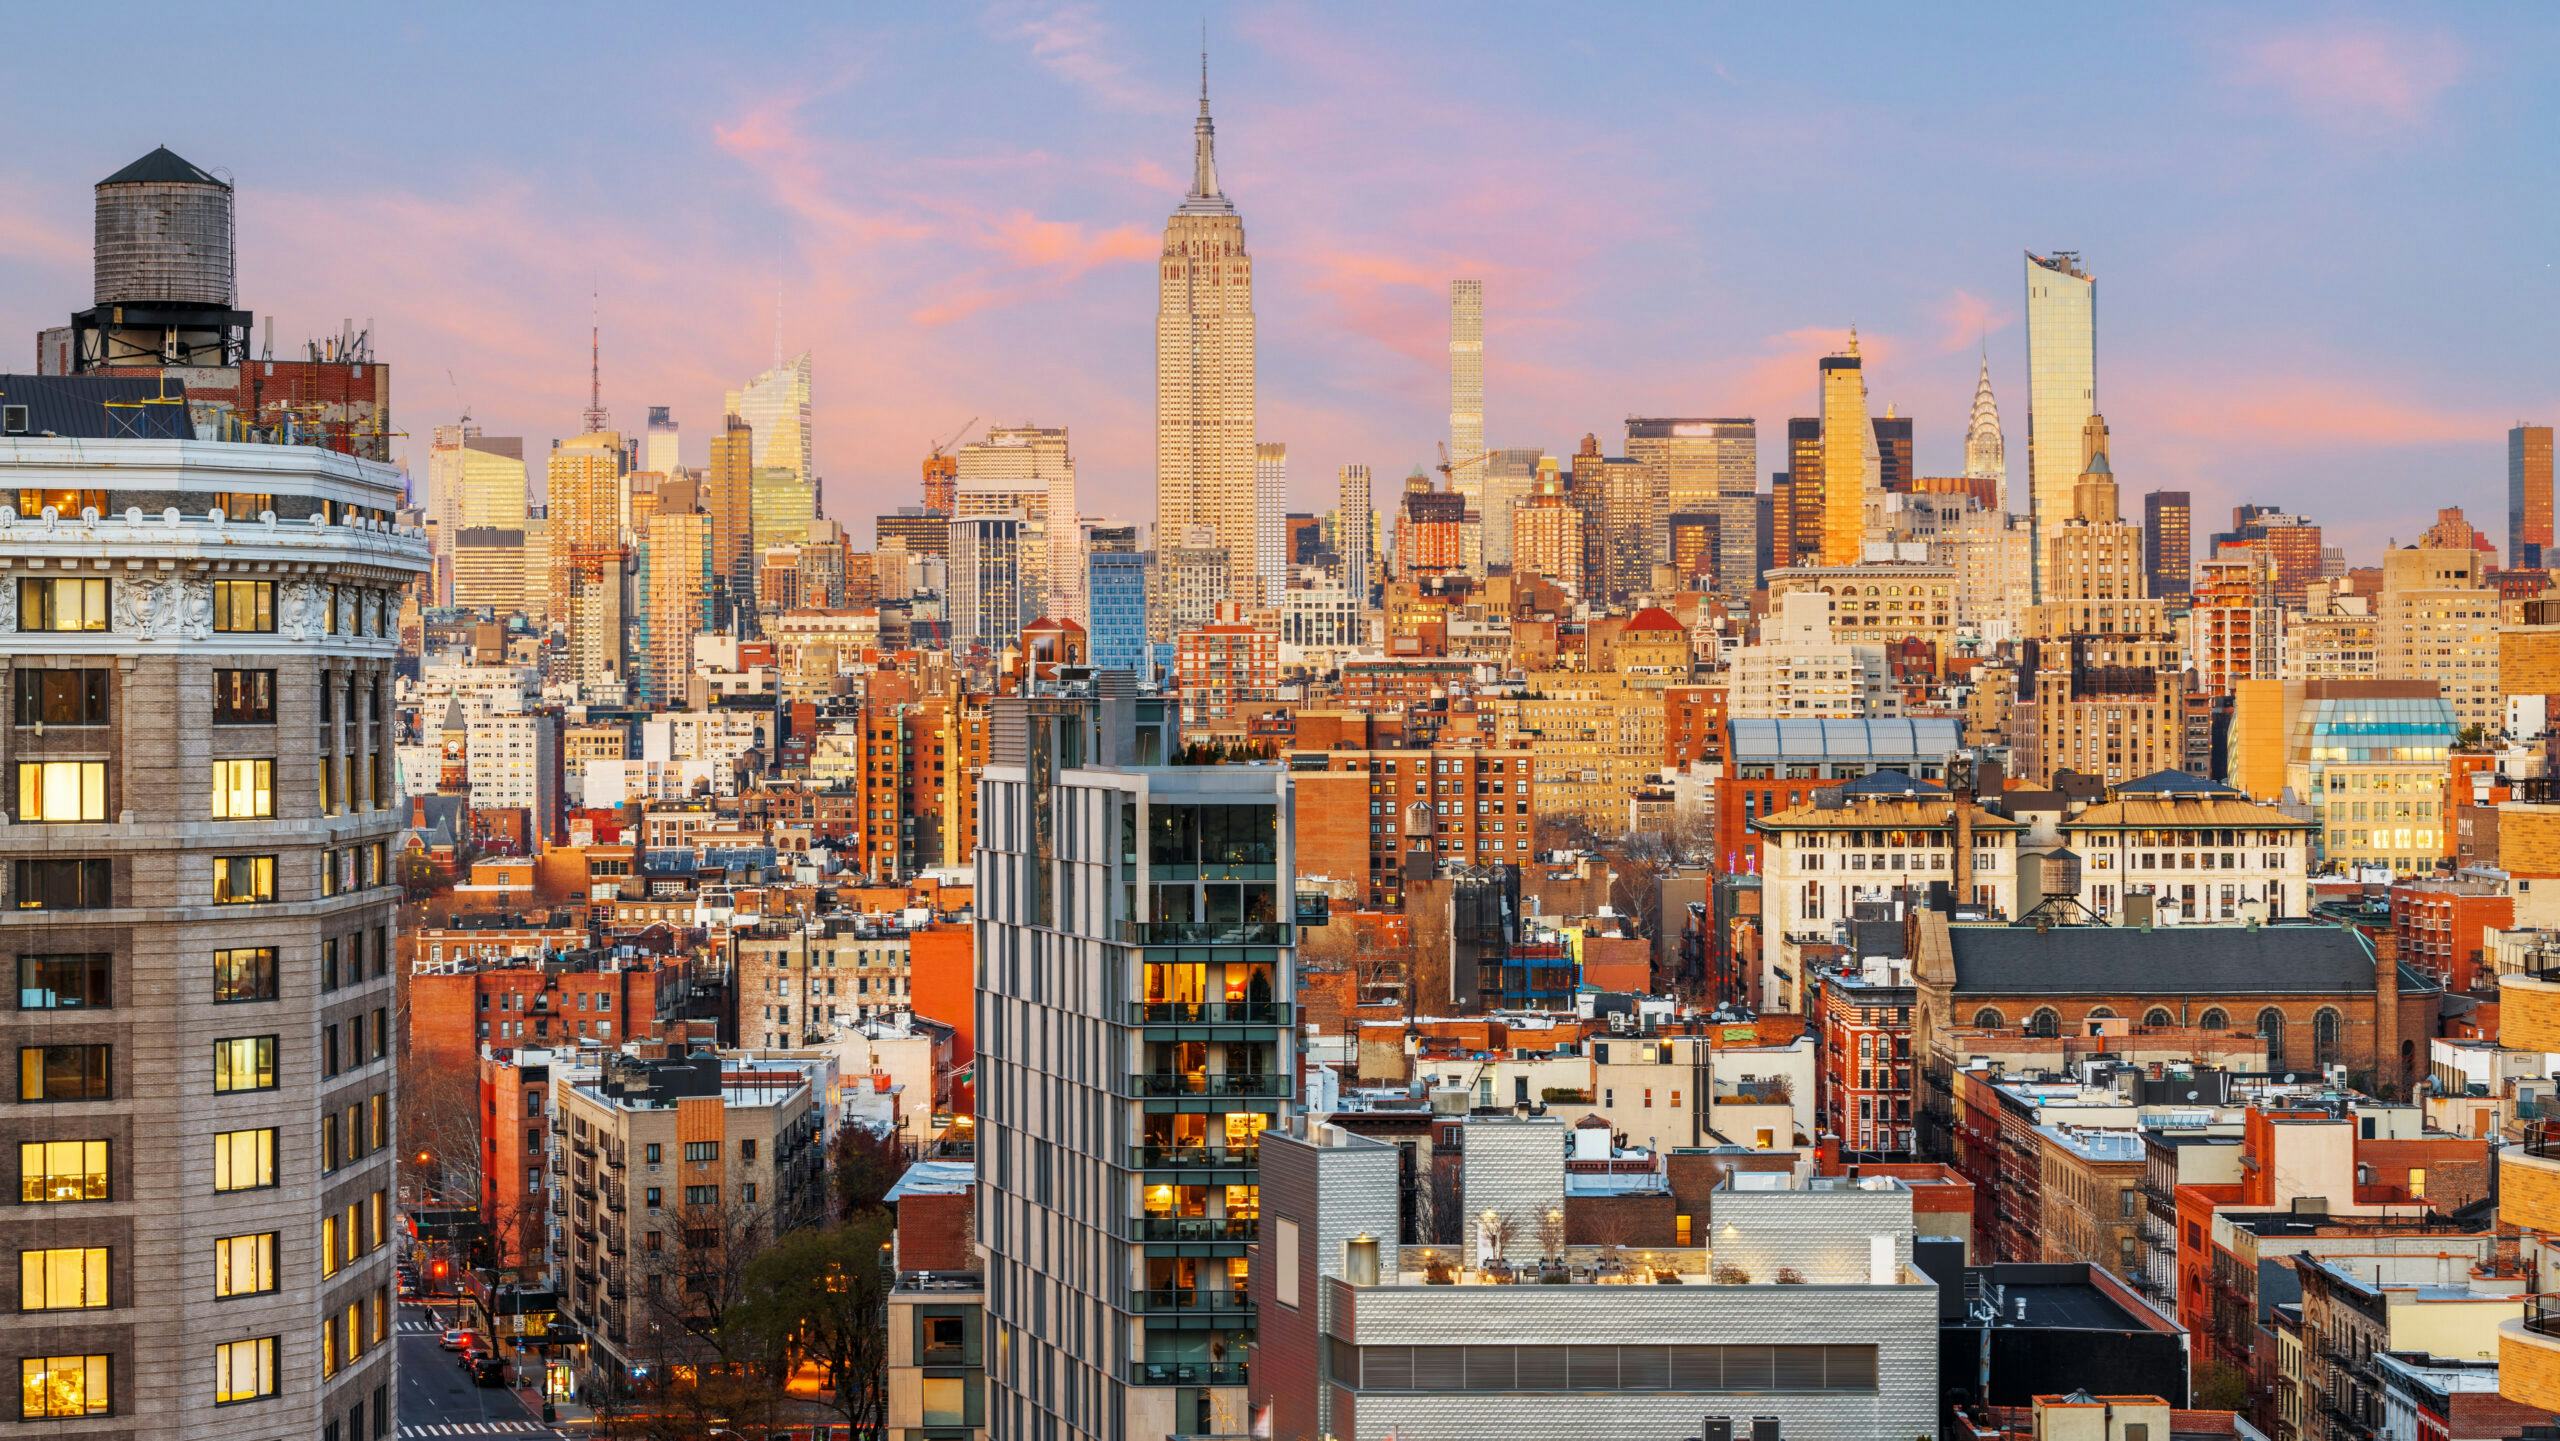 New York. Beeld: Shutterstock.